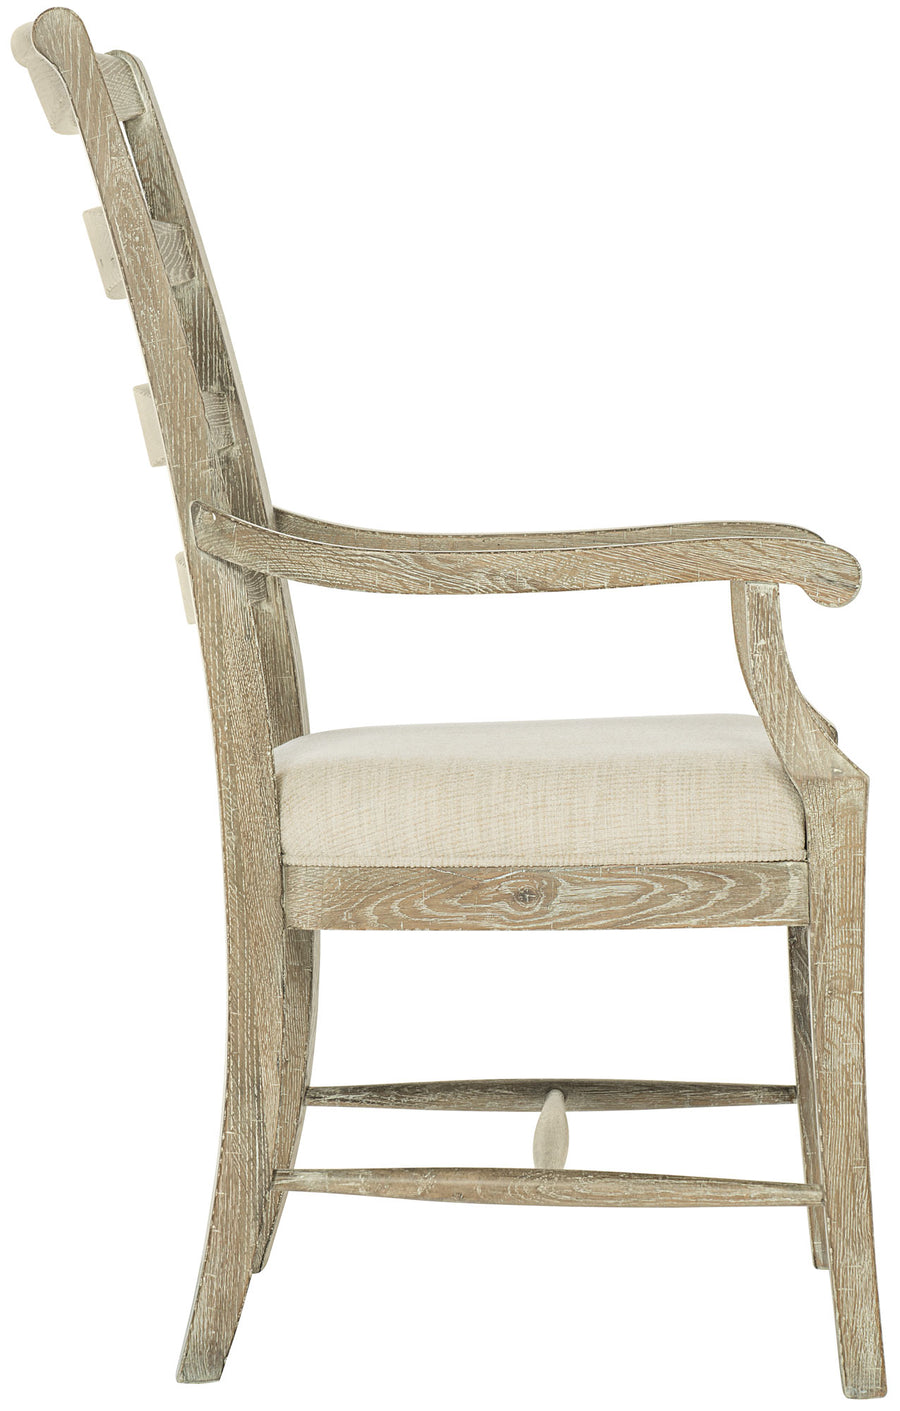 Ladder Back Arm Chair in Natural Oak